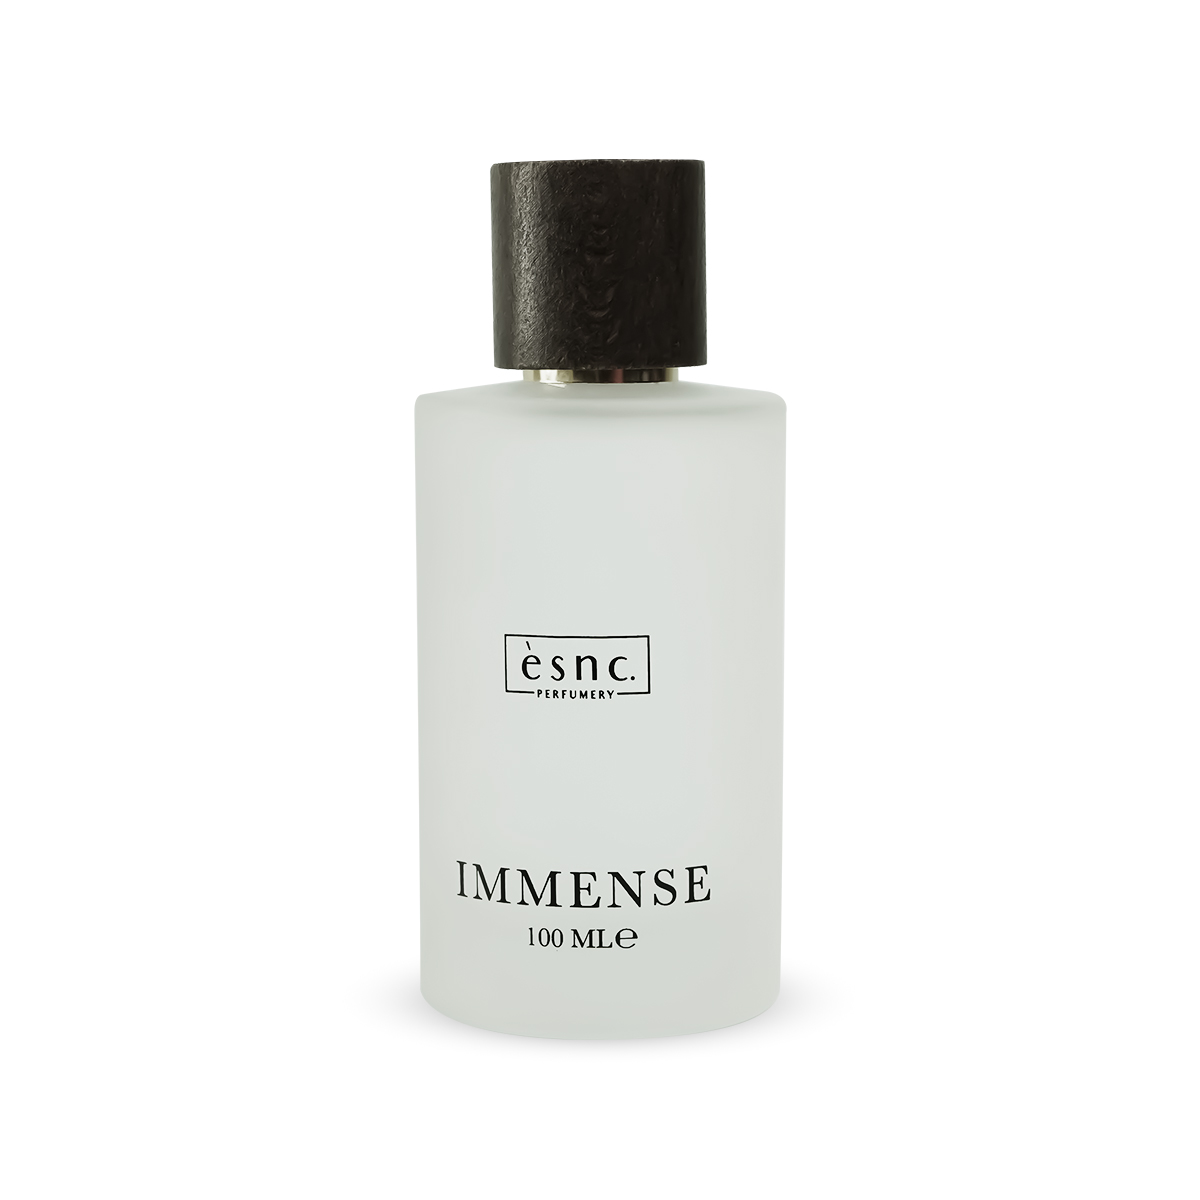 Niche 40 (Immense) - Inspired By L'Immensité Louis Vuitton - Esnc